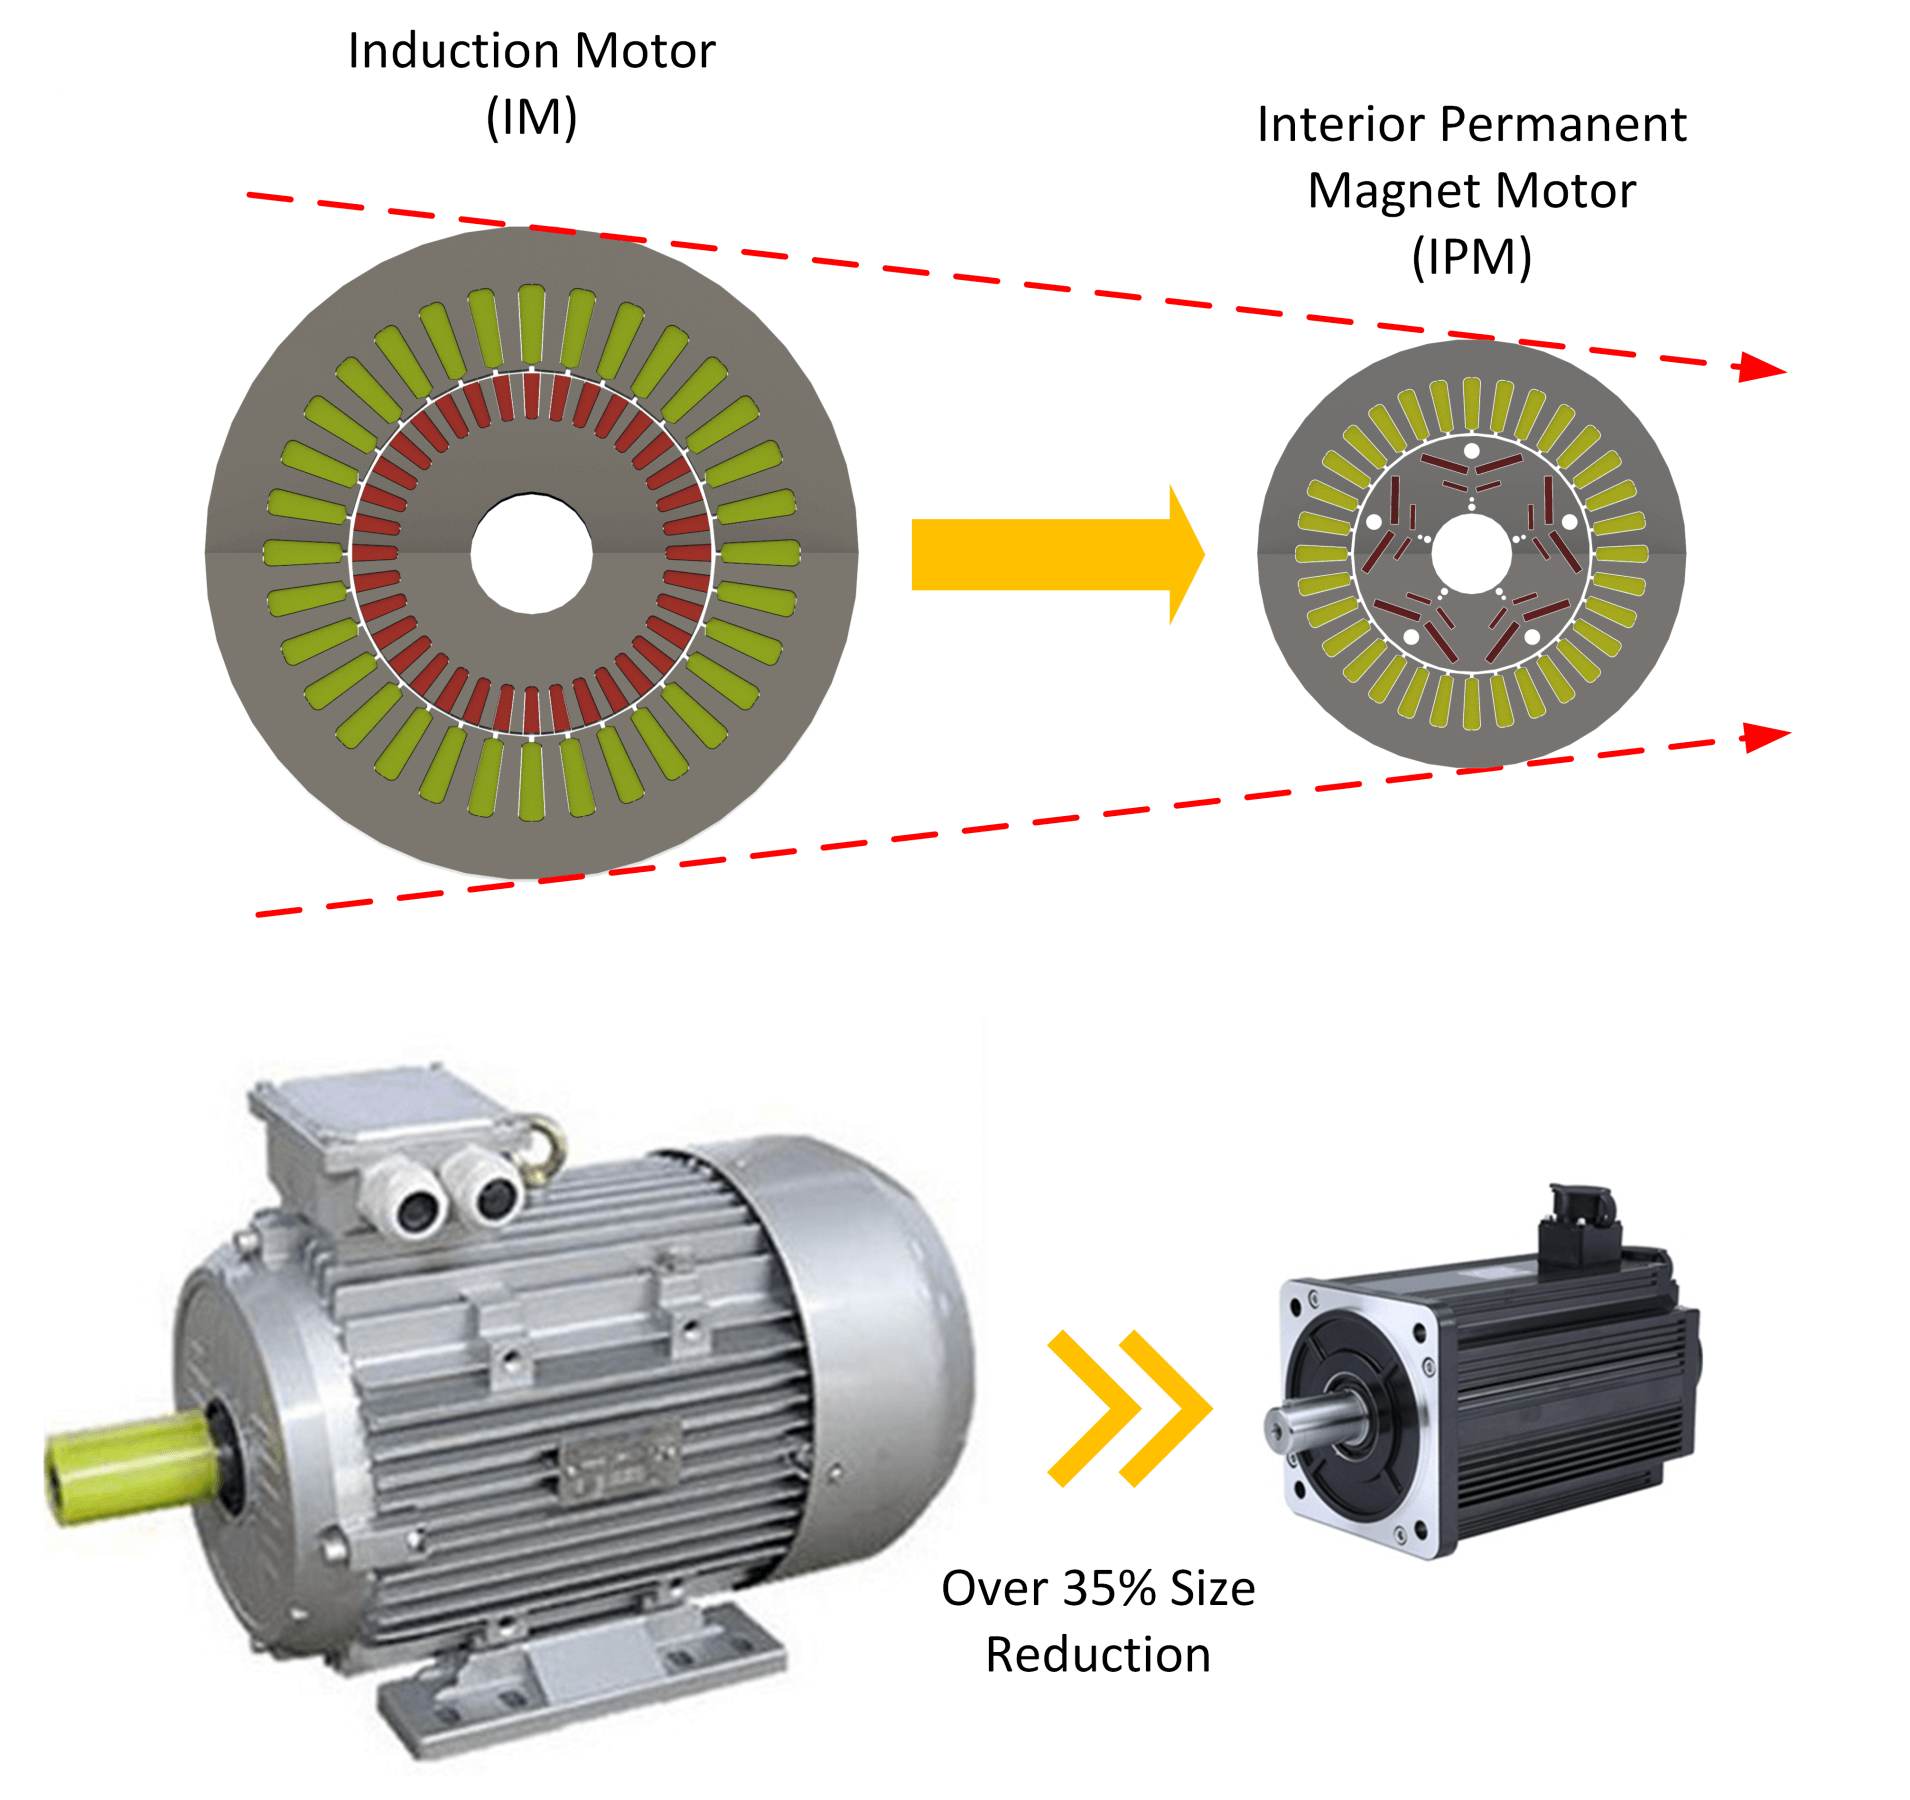 Induction motor versus permanent magnet motor size comparison compact hydraulic power unit